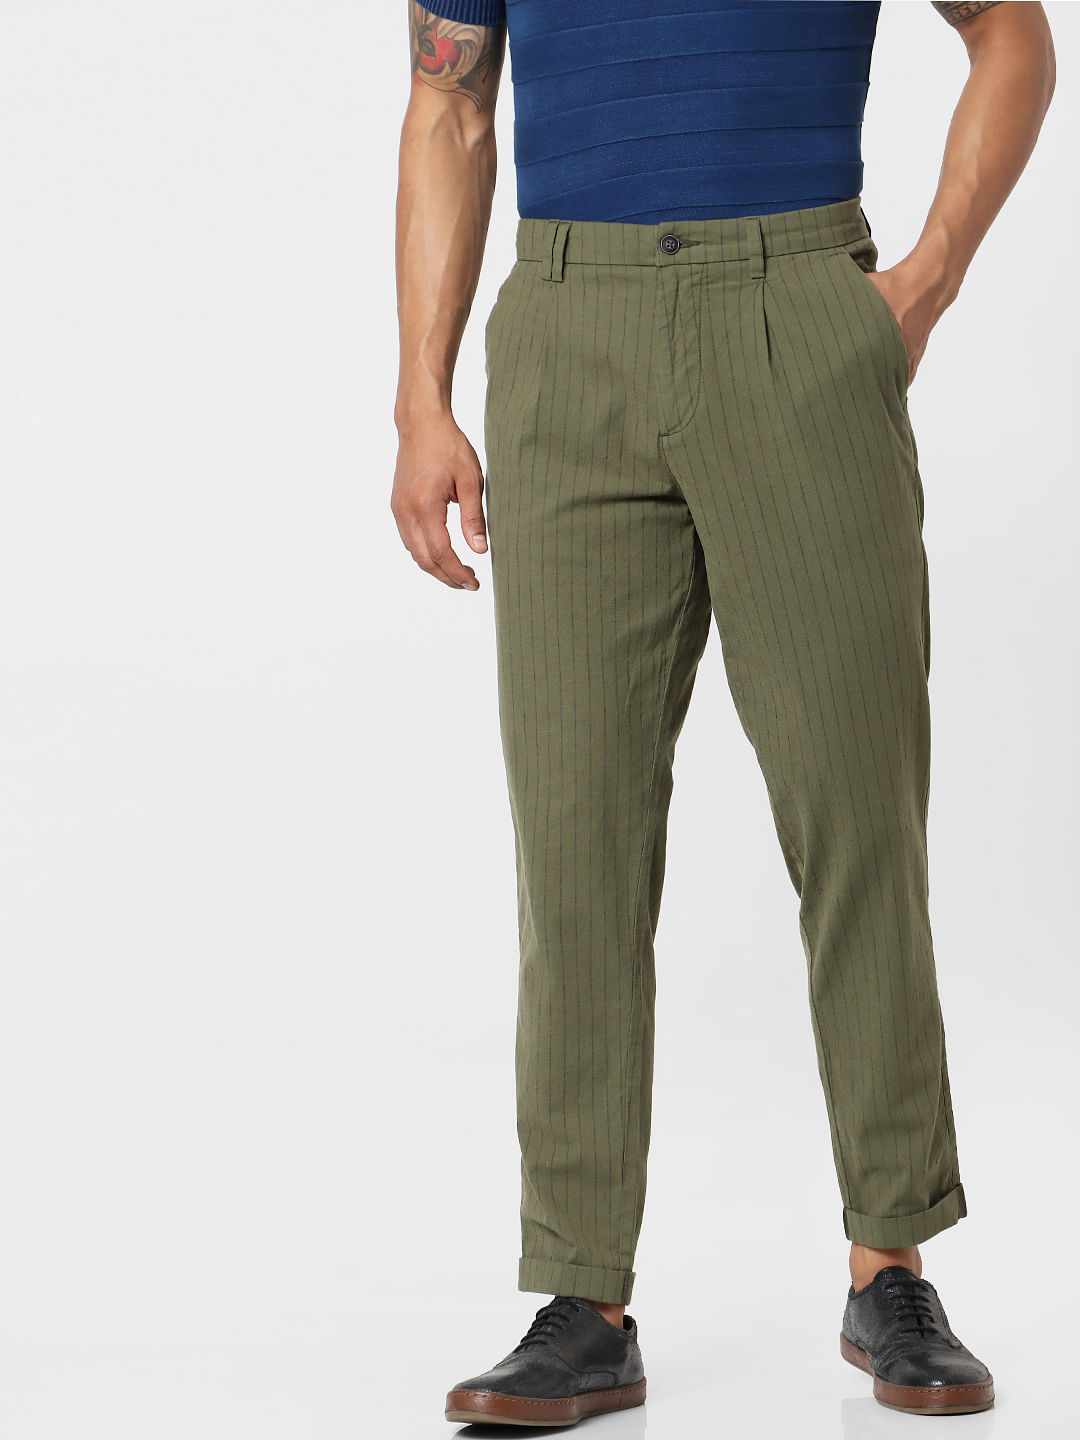 Jade Green Stripe Print Palazzo Trousers  Quiz Clothing